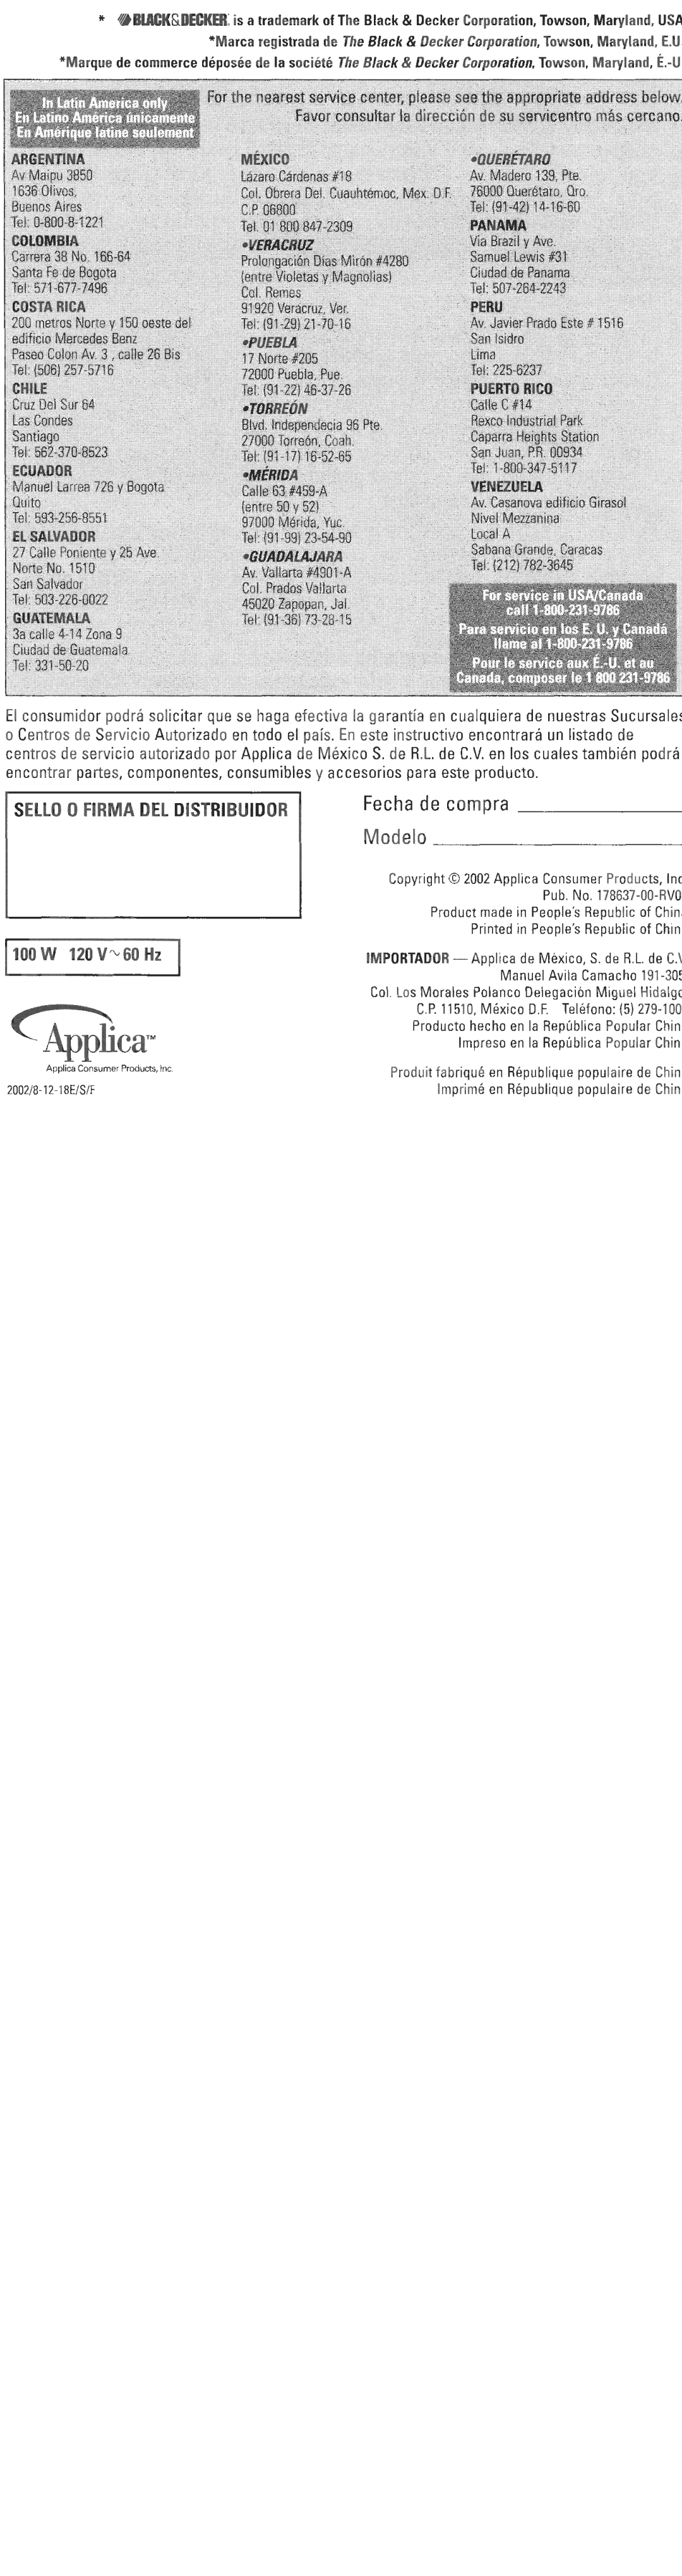 Black & Decker JW200 manual p i G G i G q, Fecha de compra, 200218-12-18ElSlF 